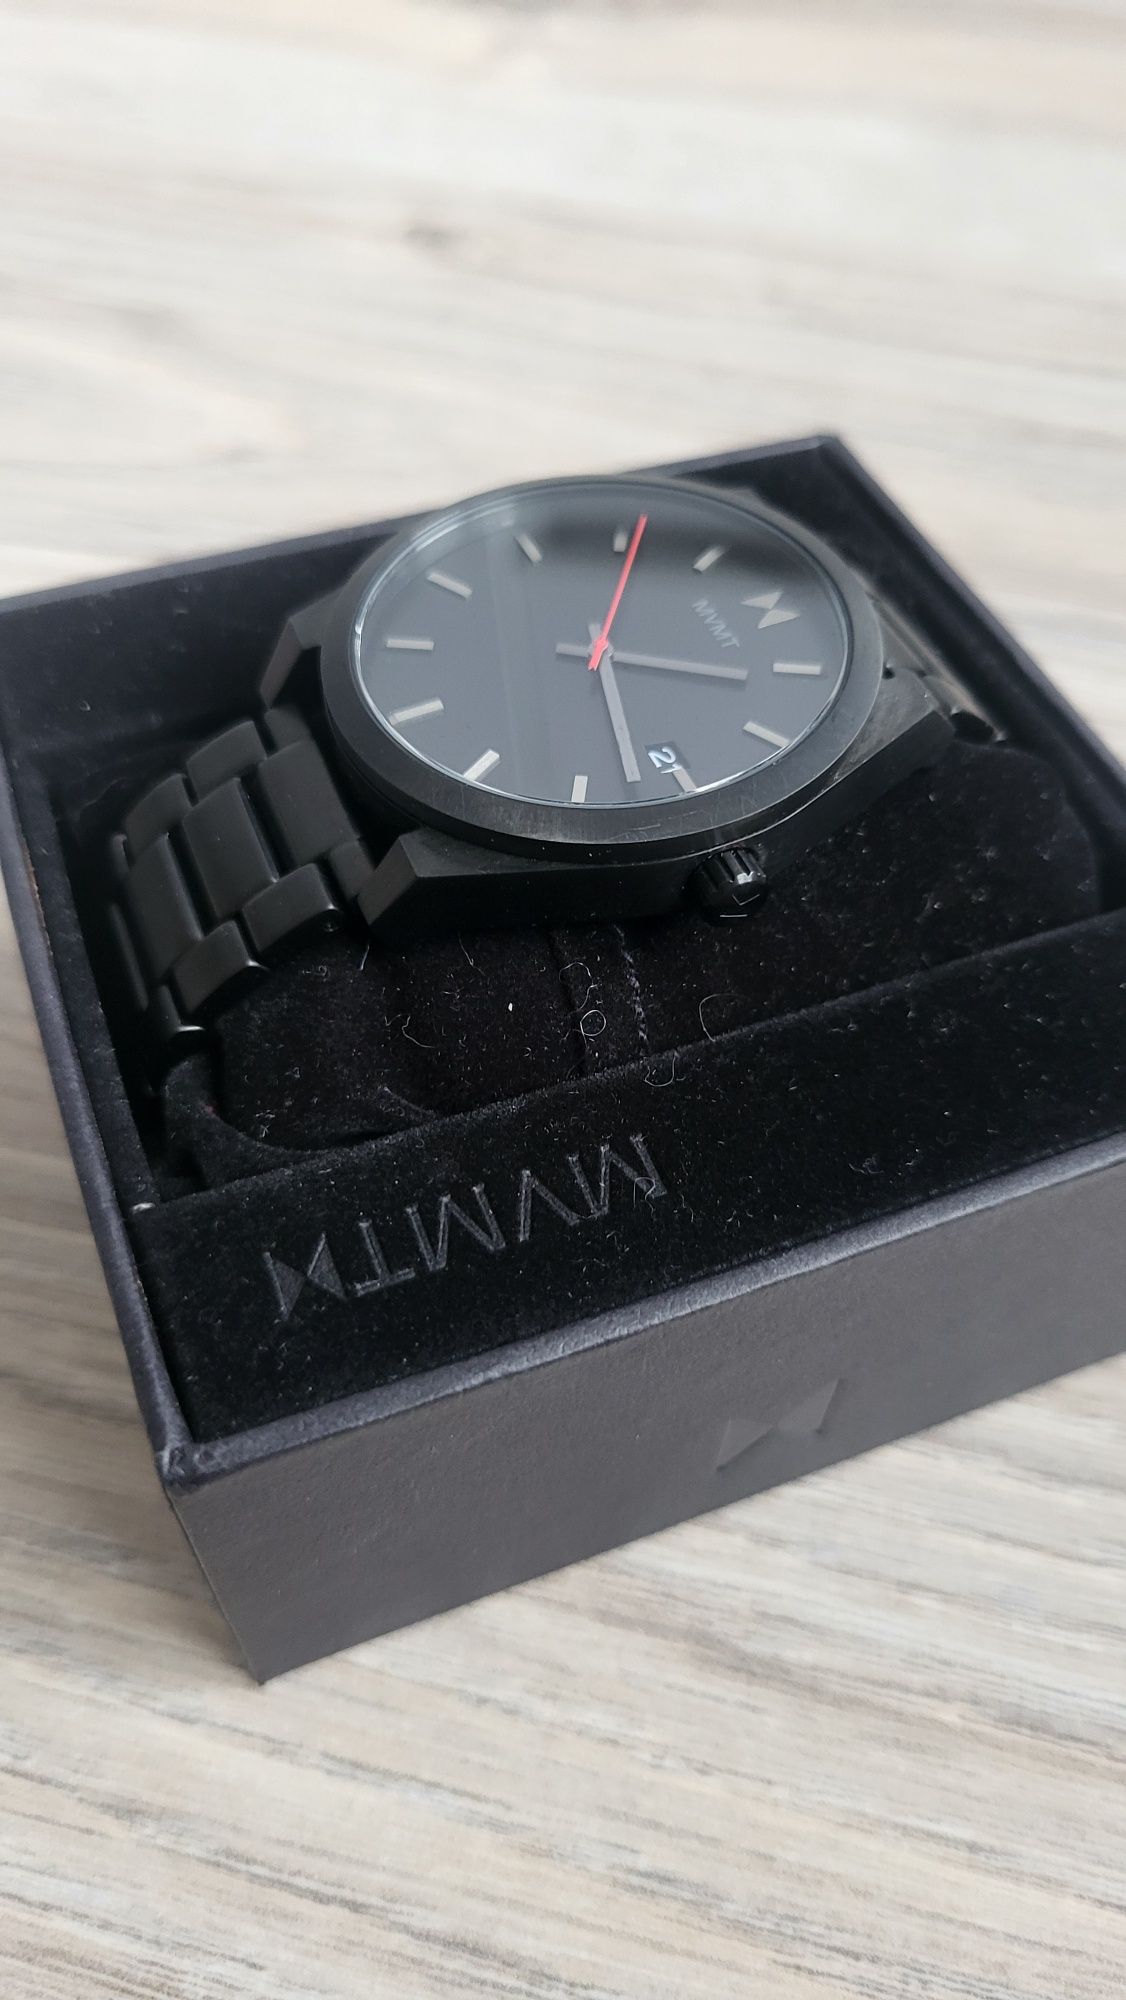 Zegarek MVMT  Nowy